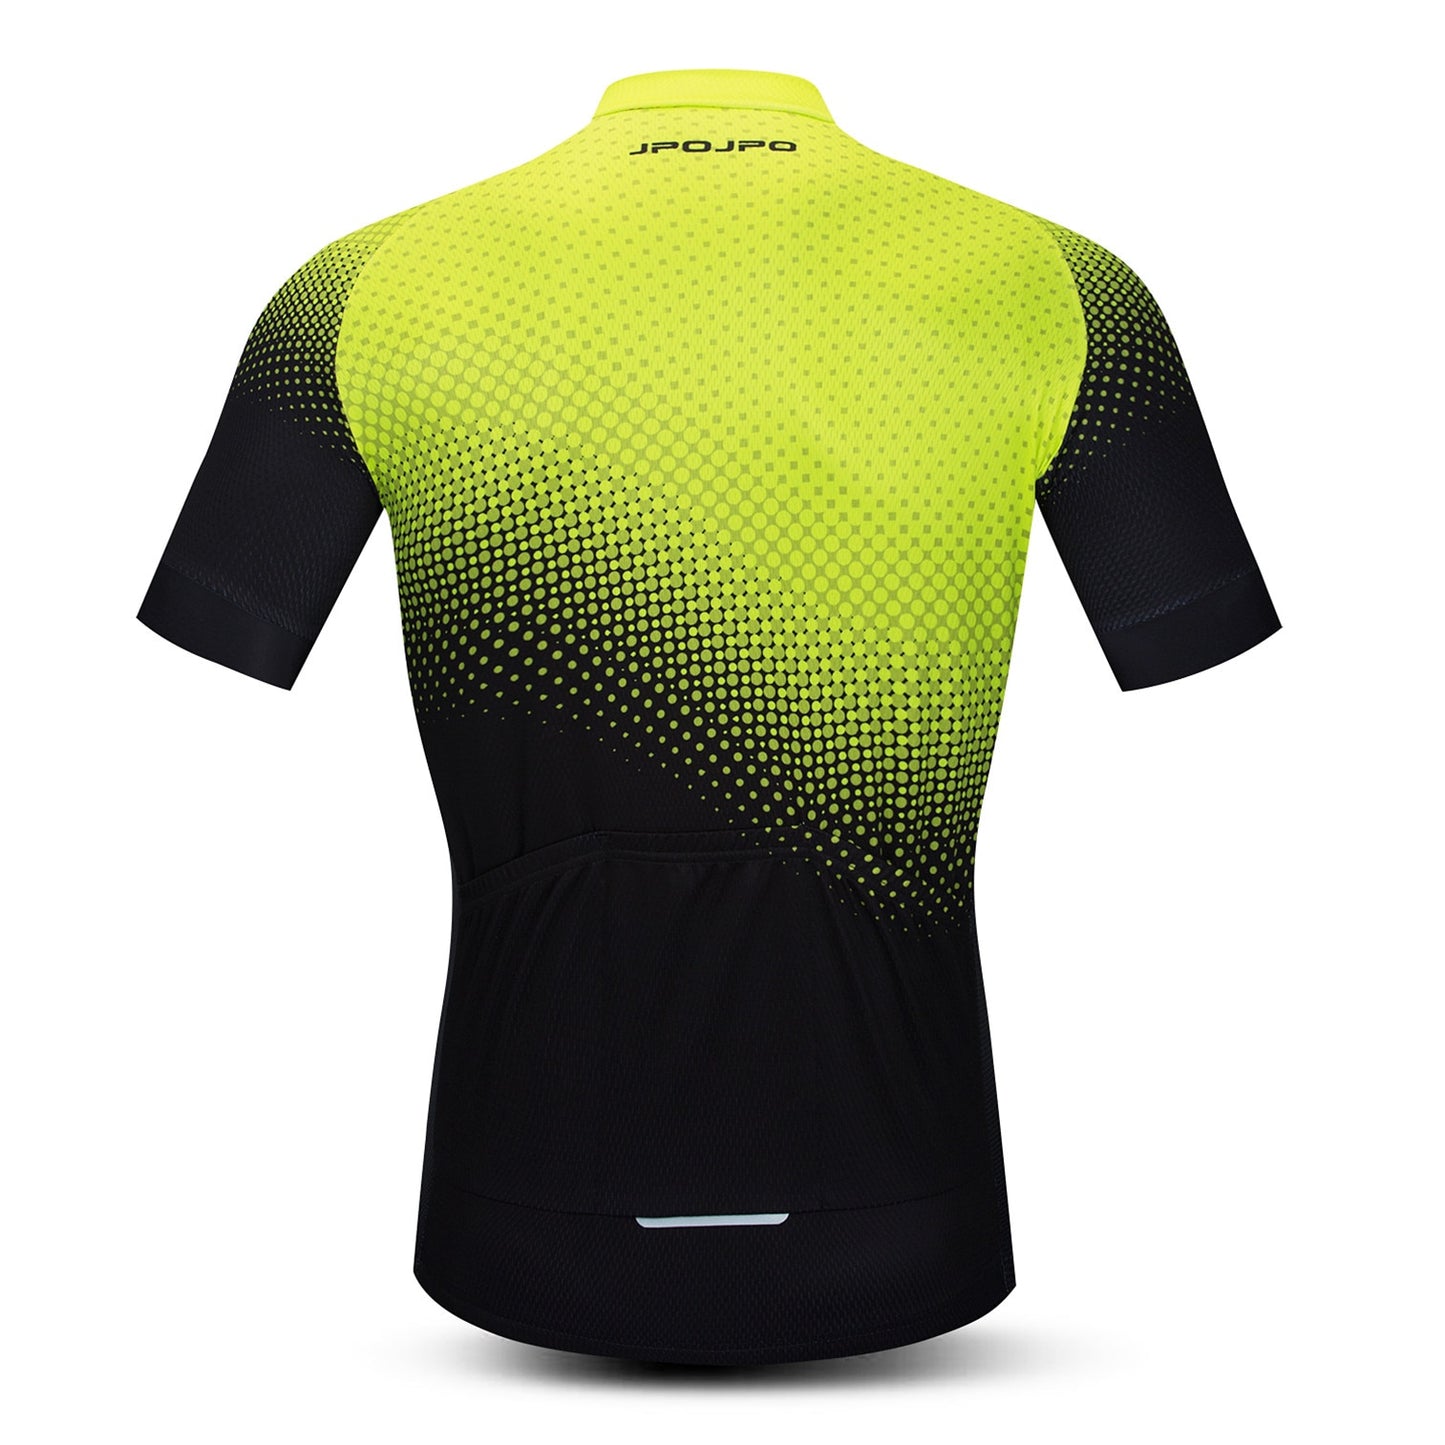 Performance Pro: Men's Yellow Cycling Jersey | Breathable MTB Bike Top for Summer Riding | Short Sleeve Road & Mountain Biking Apparel BIKE FIELD